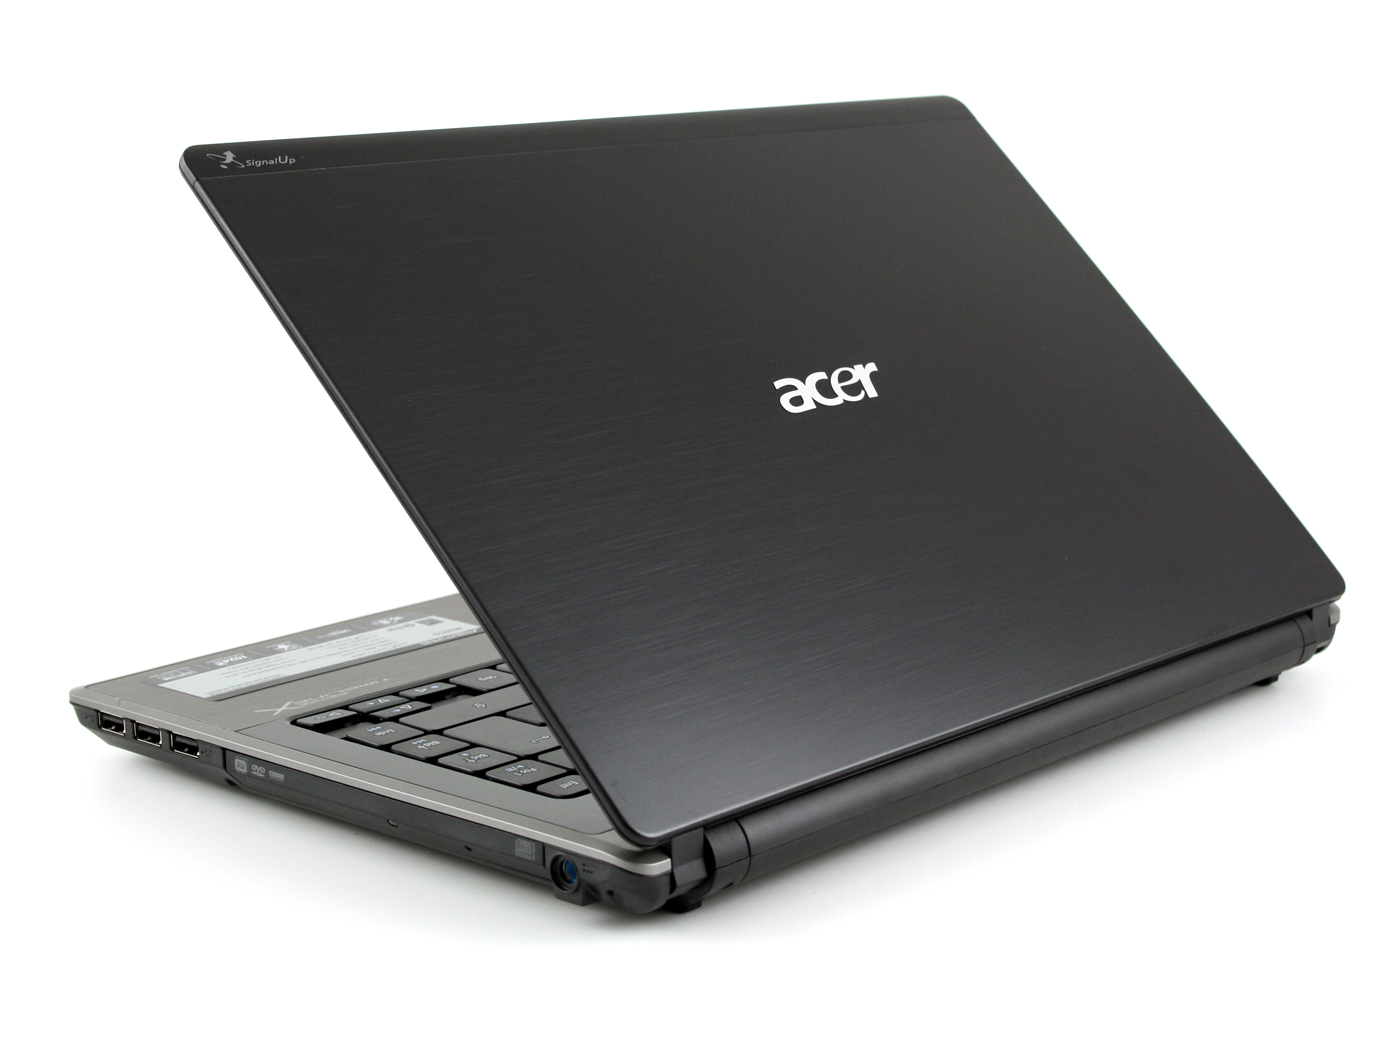 Acer aspire 4820 (3820の海外版)